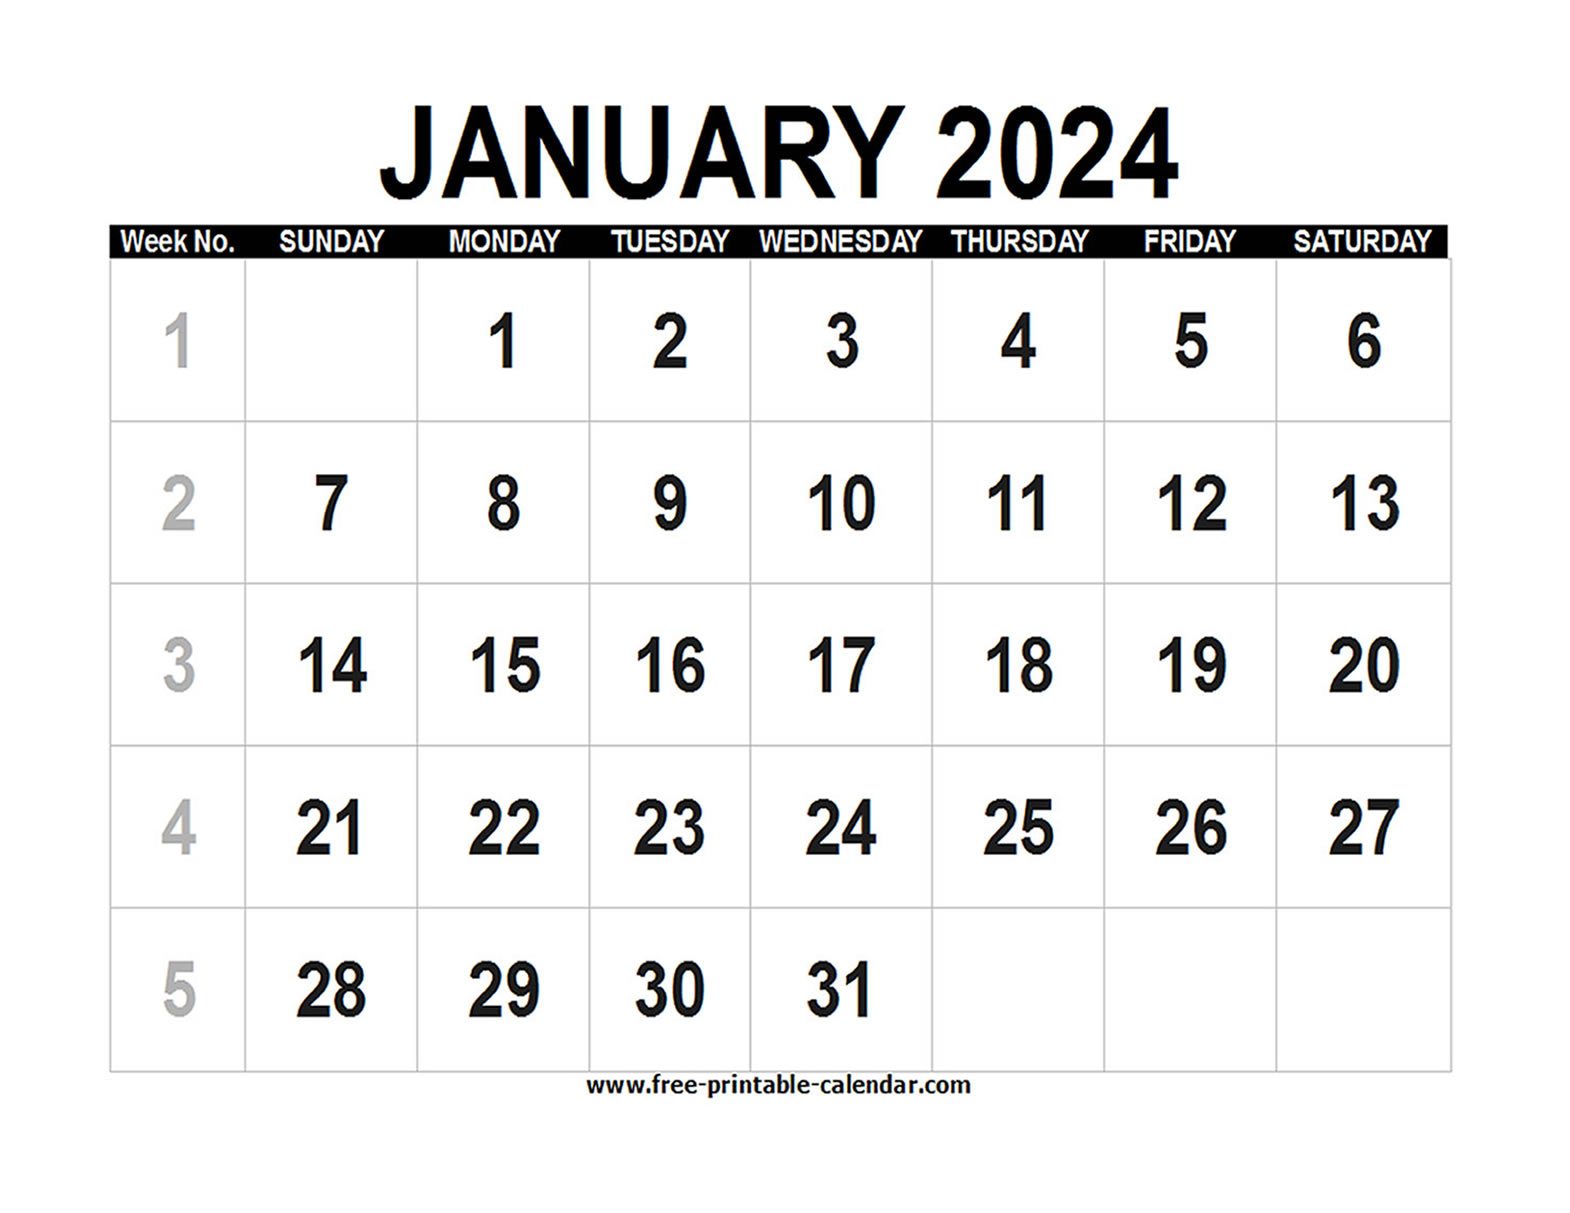 Blank Calendar 2024 January - Free-printable-calendar.com